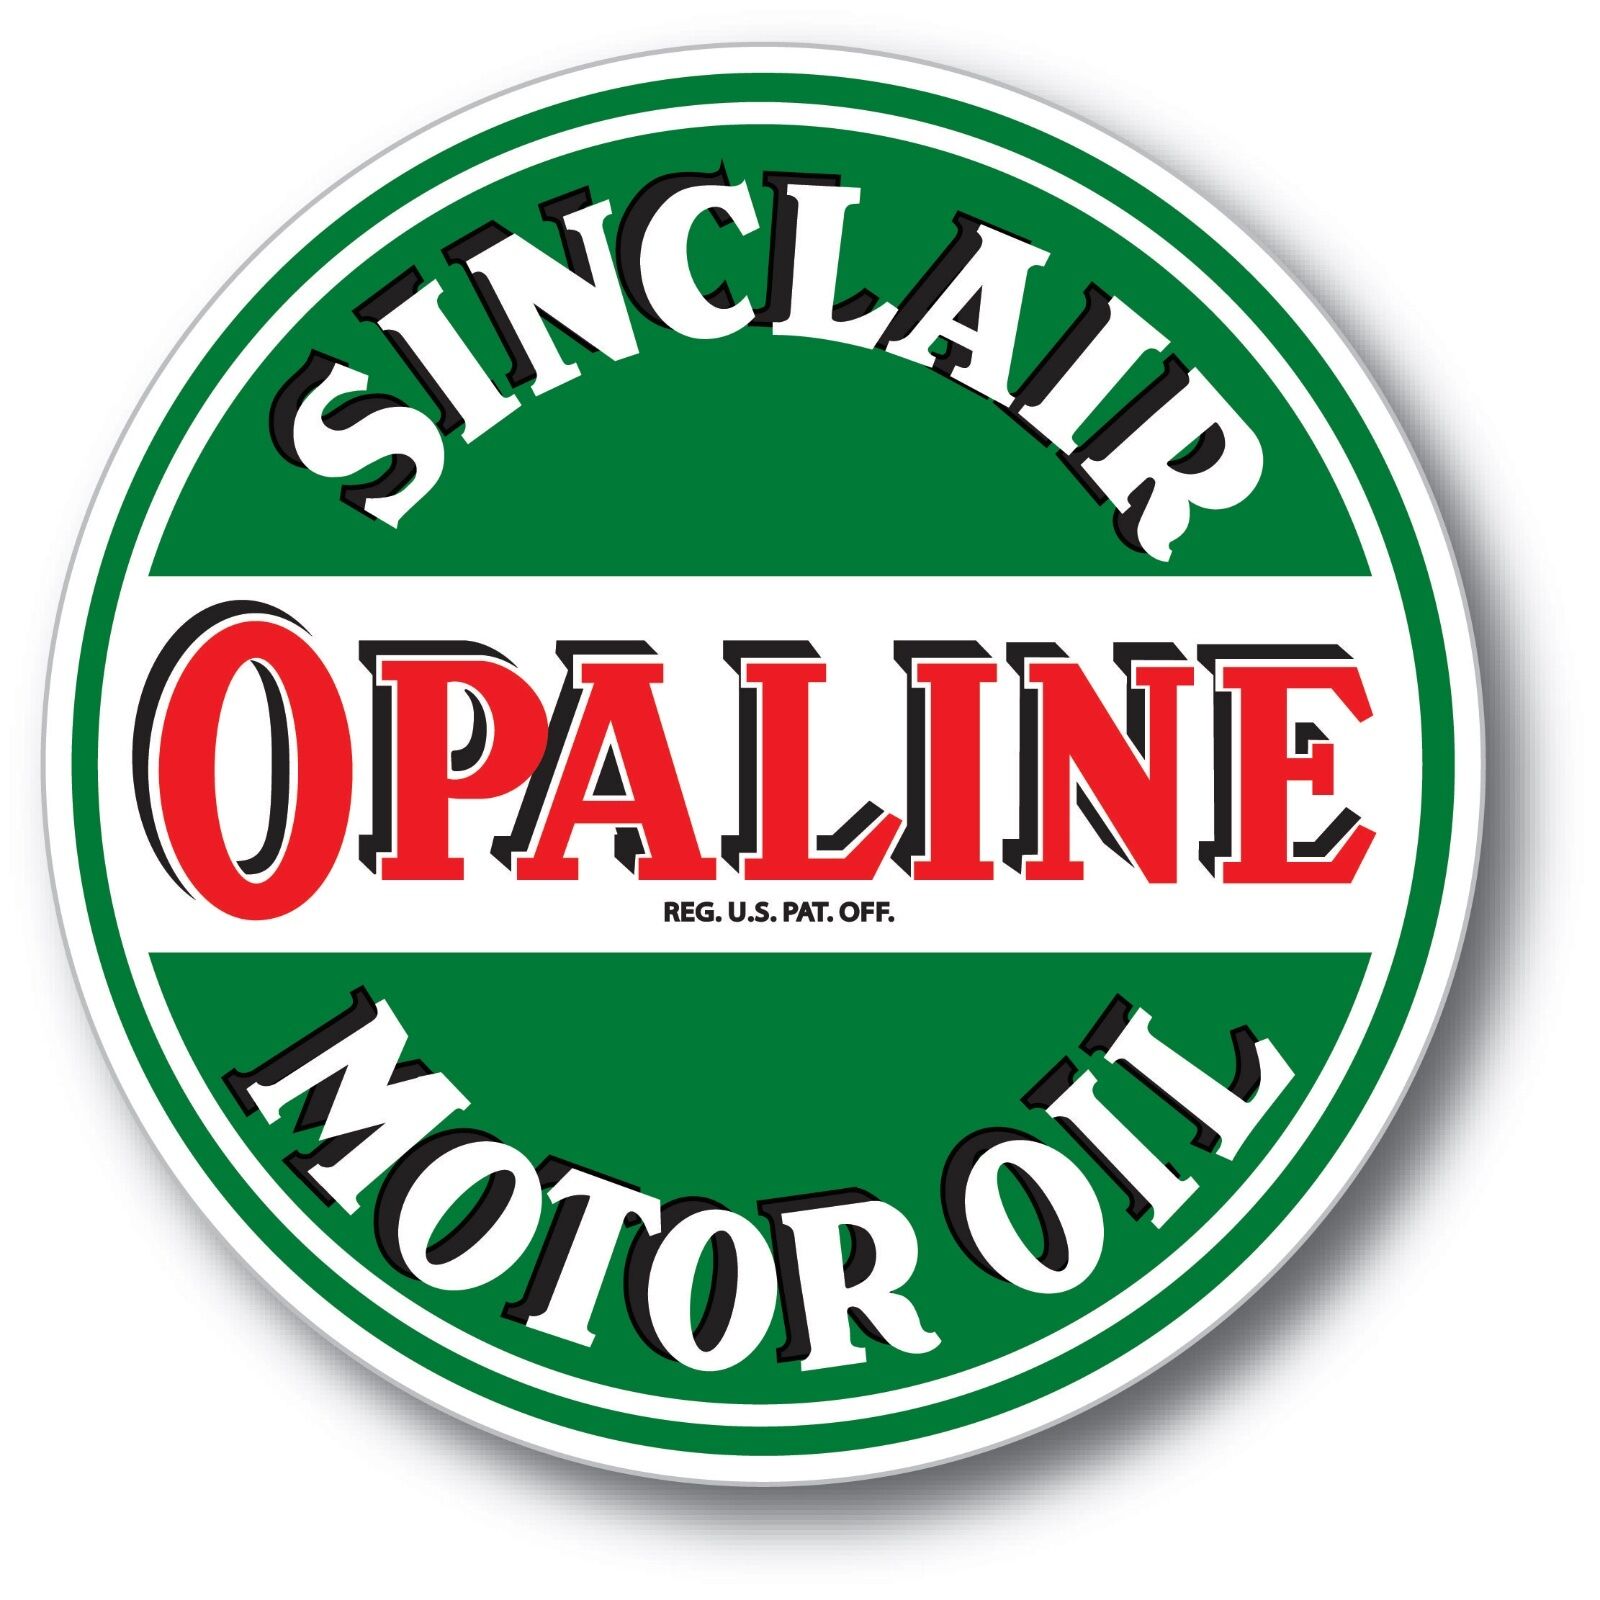 Sinclair Opaline Gasoline Oil Super High Gloss Outdoor 4 Inch Decal Sticker